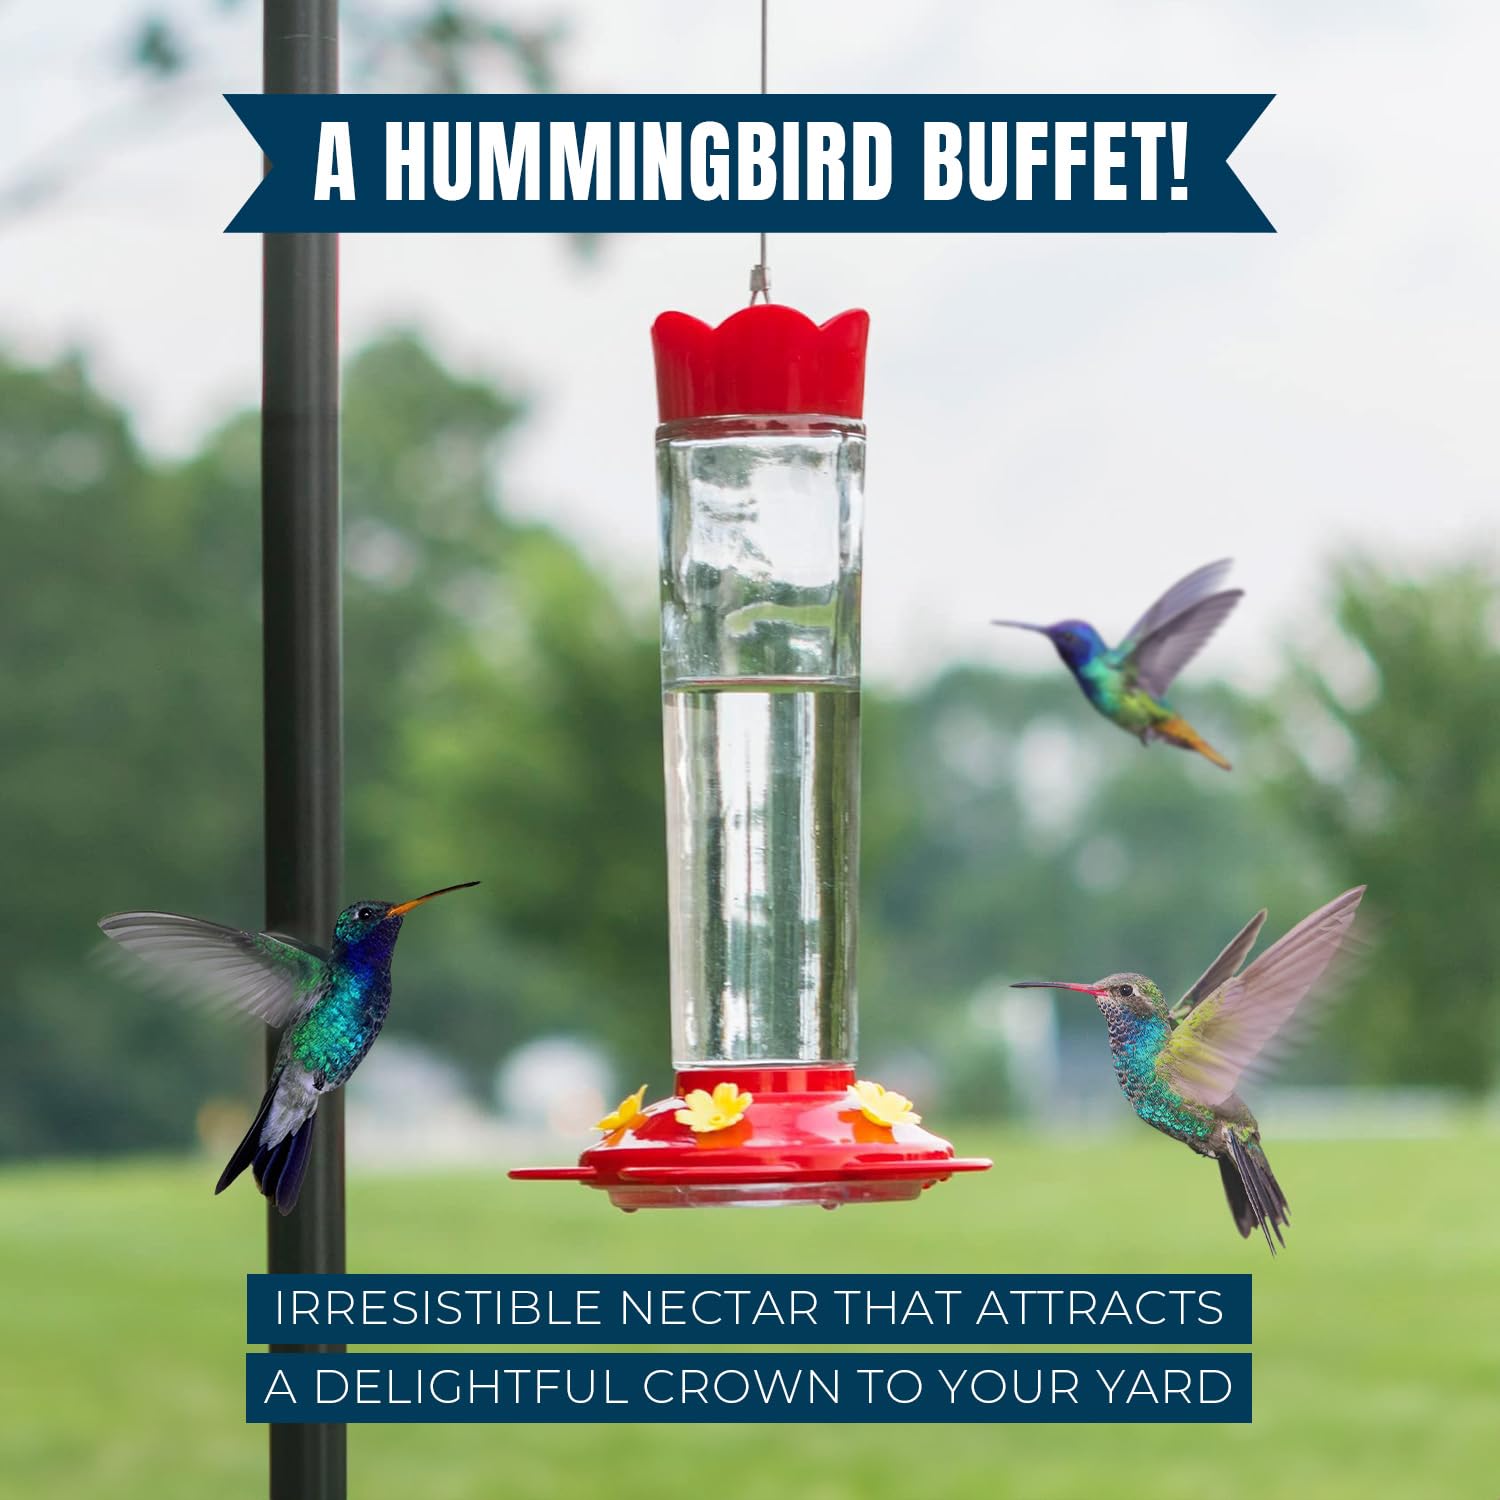 Mekkapro Premium Hummingbird Nectar - 32oz - Attract, Delight, And Energize Your Garden